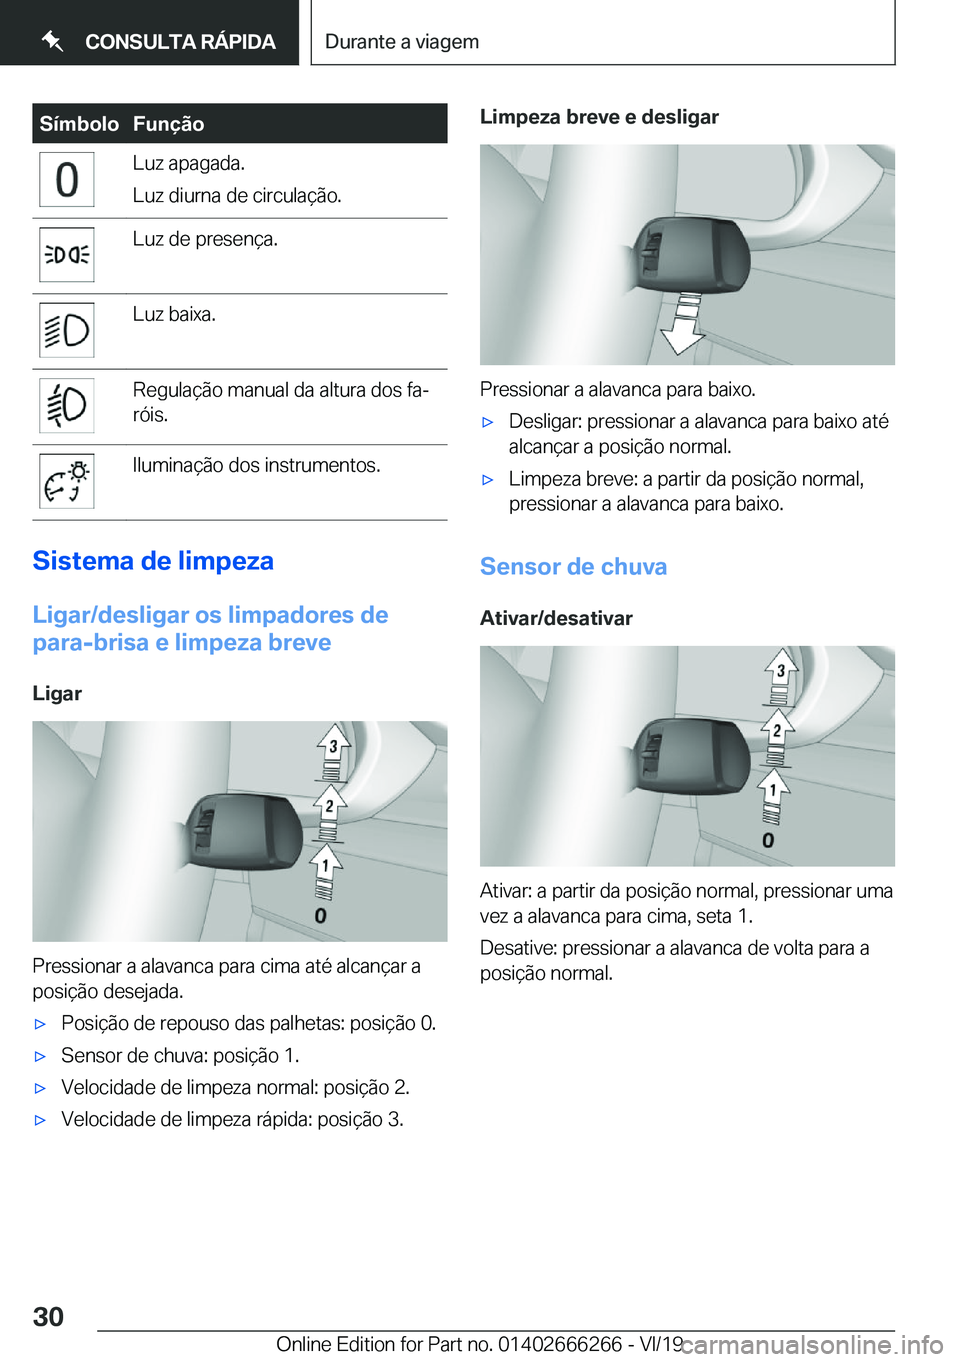 BMW 2 SERIES COUPE 2020  Manual do condutor (in Portuguese) �S�